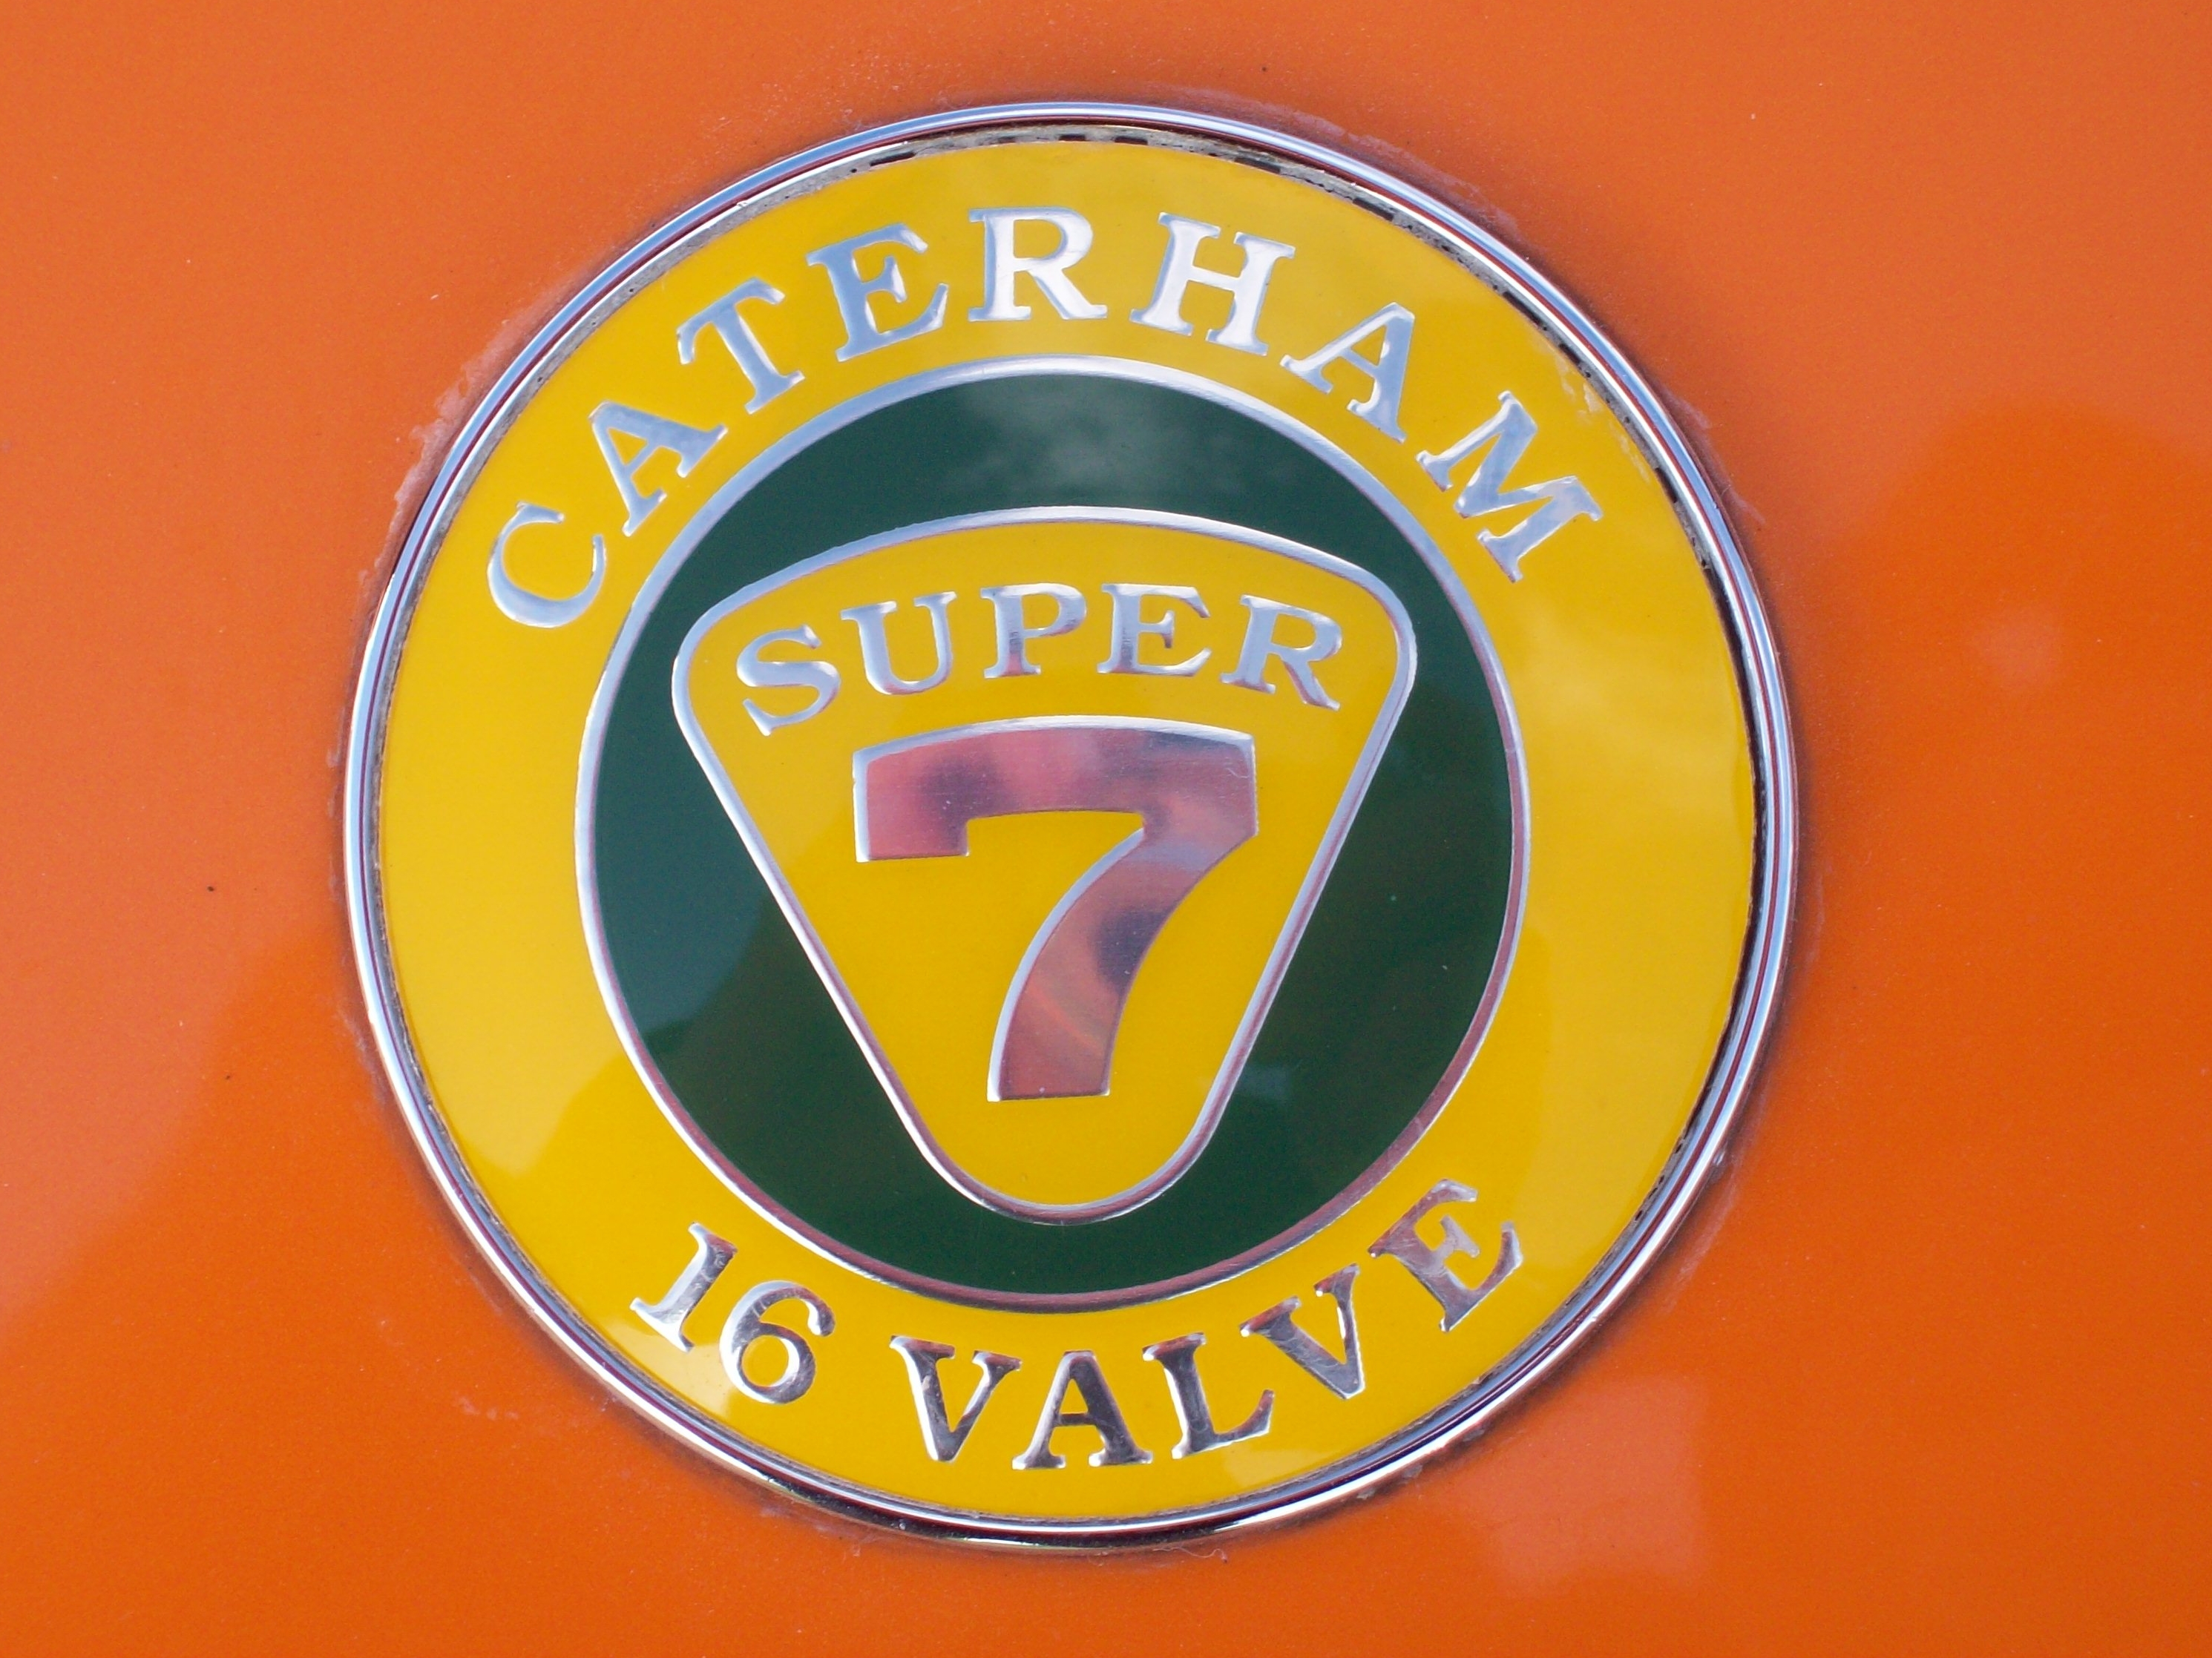 121 Caterham Super 7 16v Badge | Flickr - Photo Sharing!